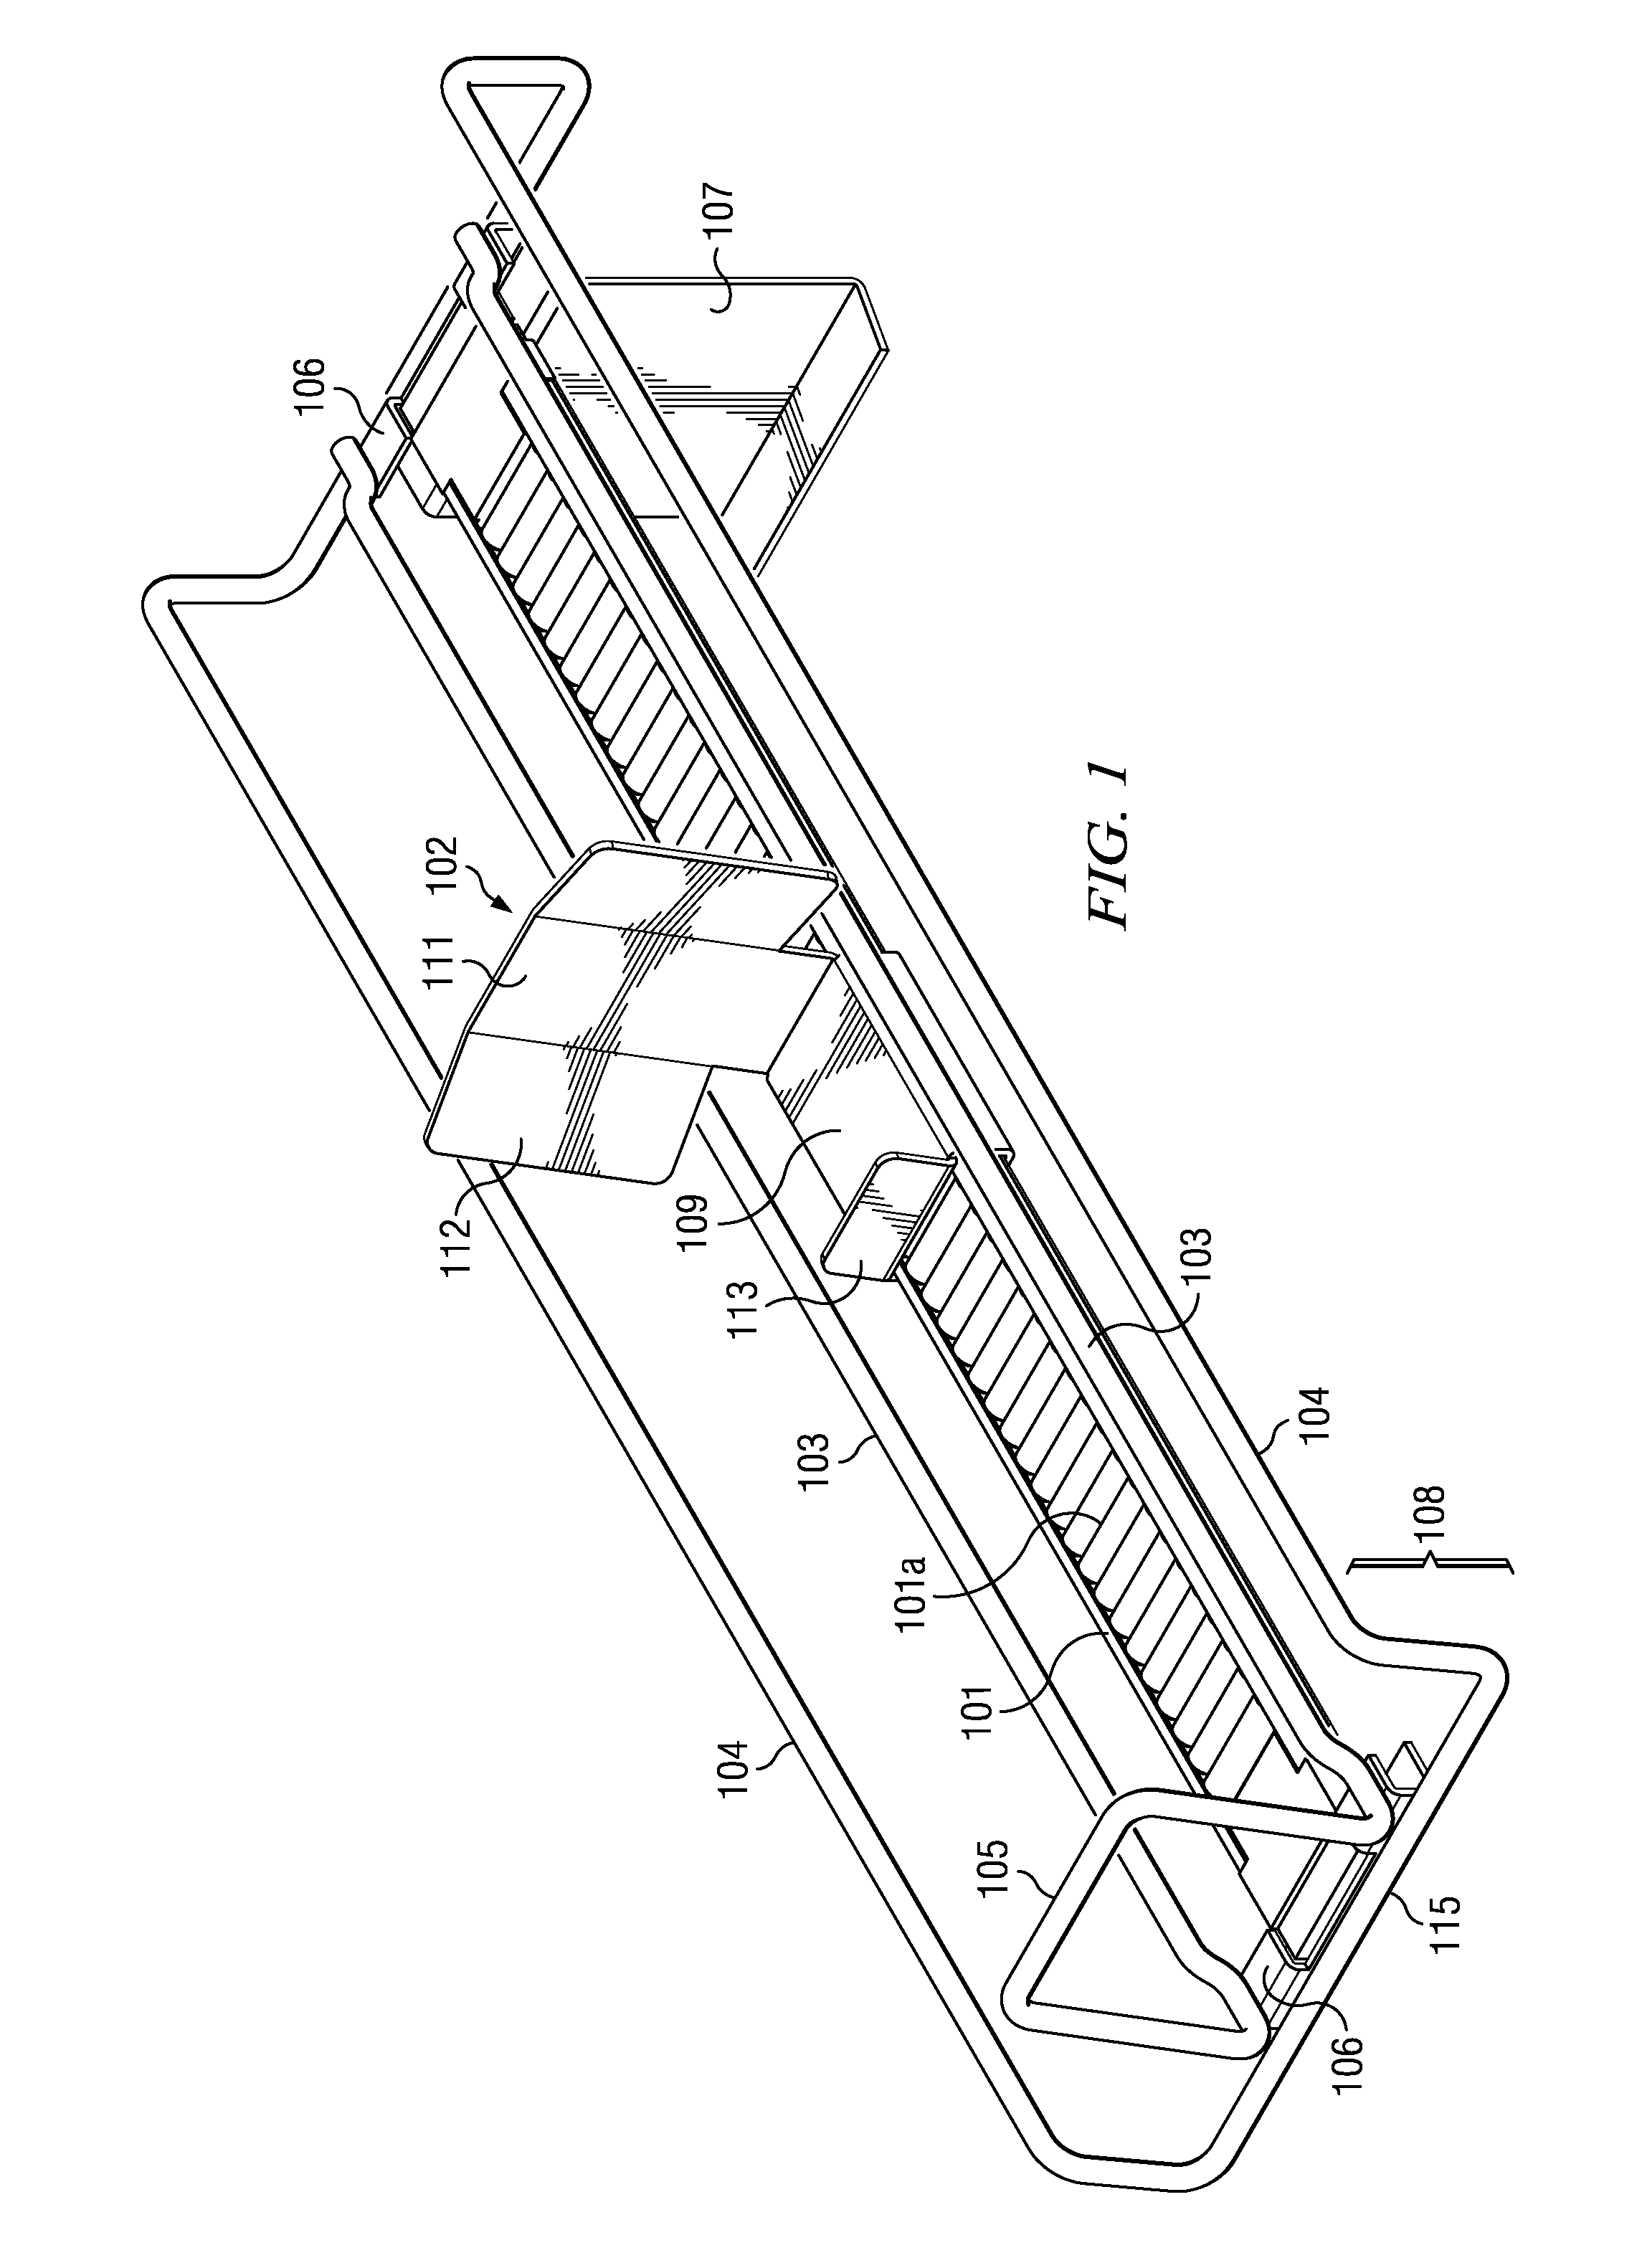 Dual plane self-adjusting shelf